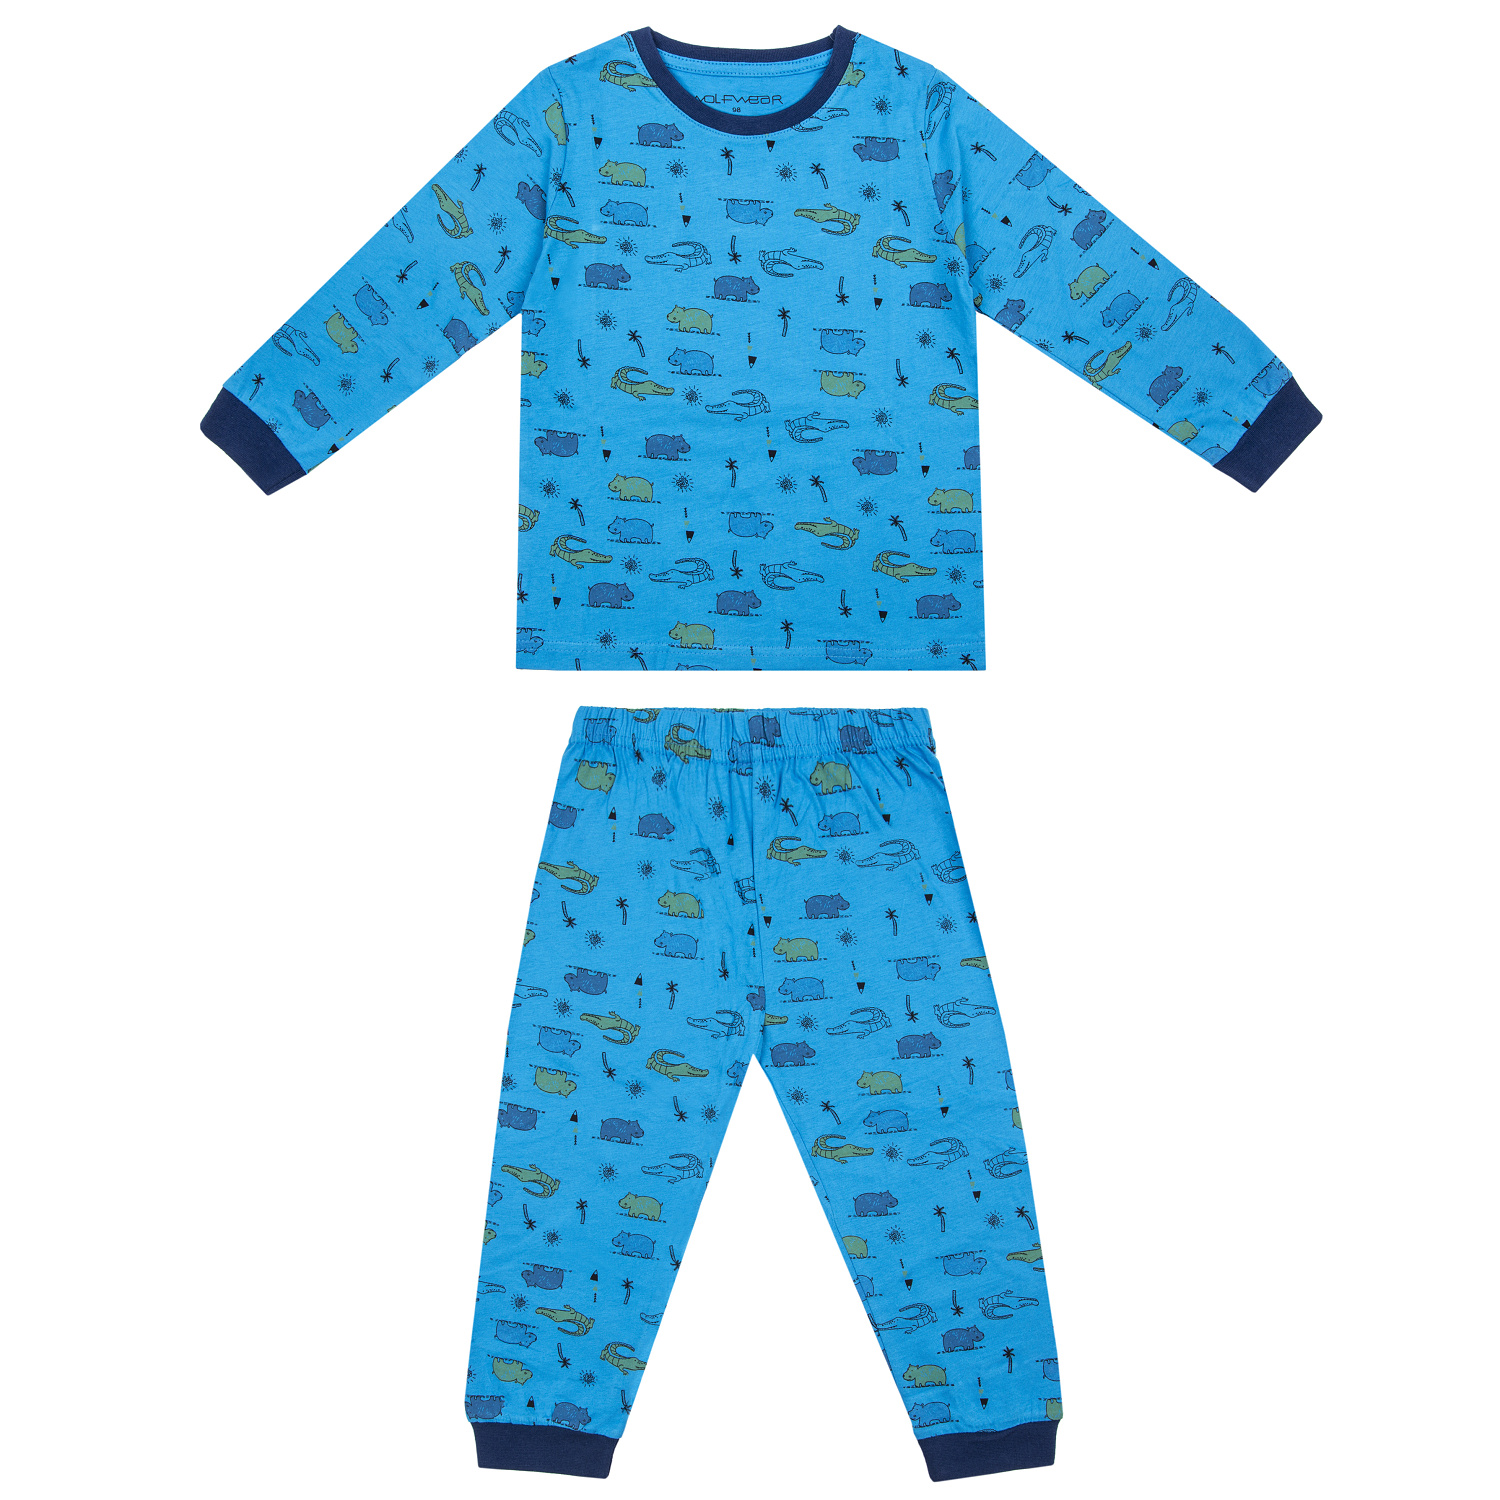 Chlapecké pyžamo - Wolf S2151, modrá Barva: Modrá, Velikost: 86